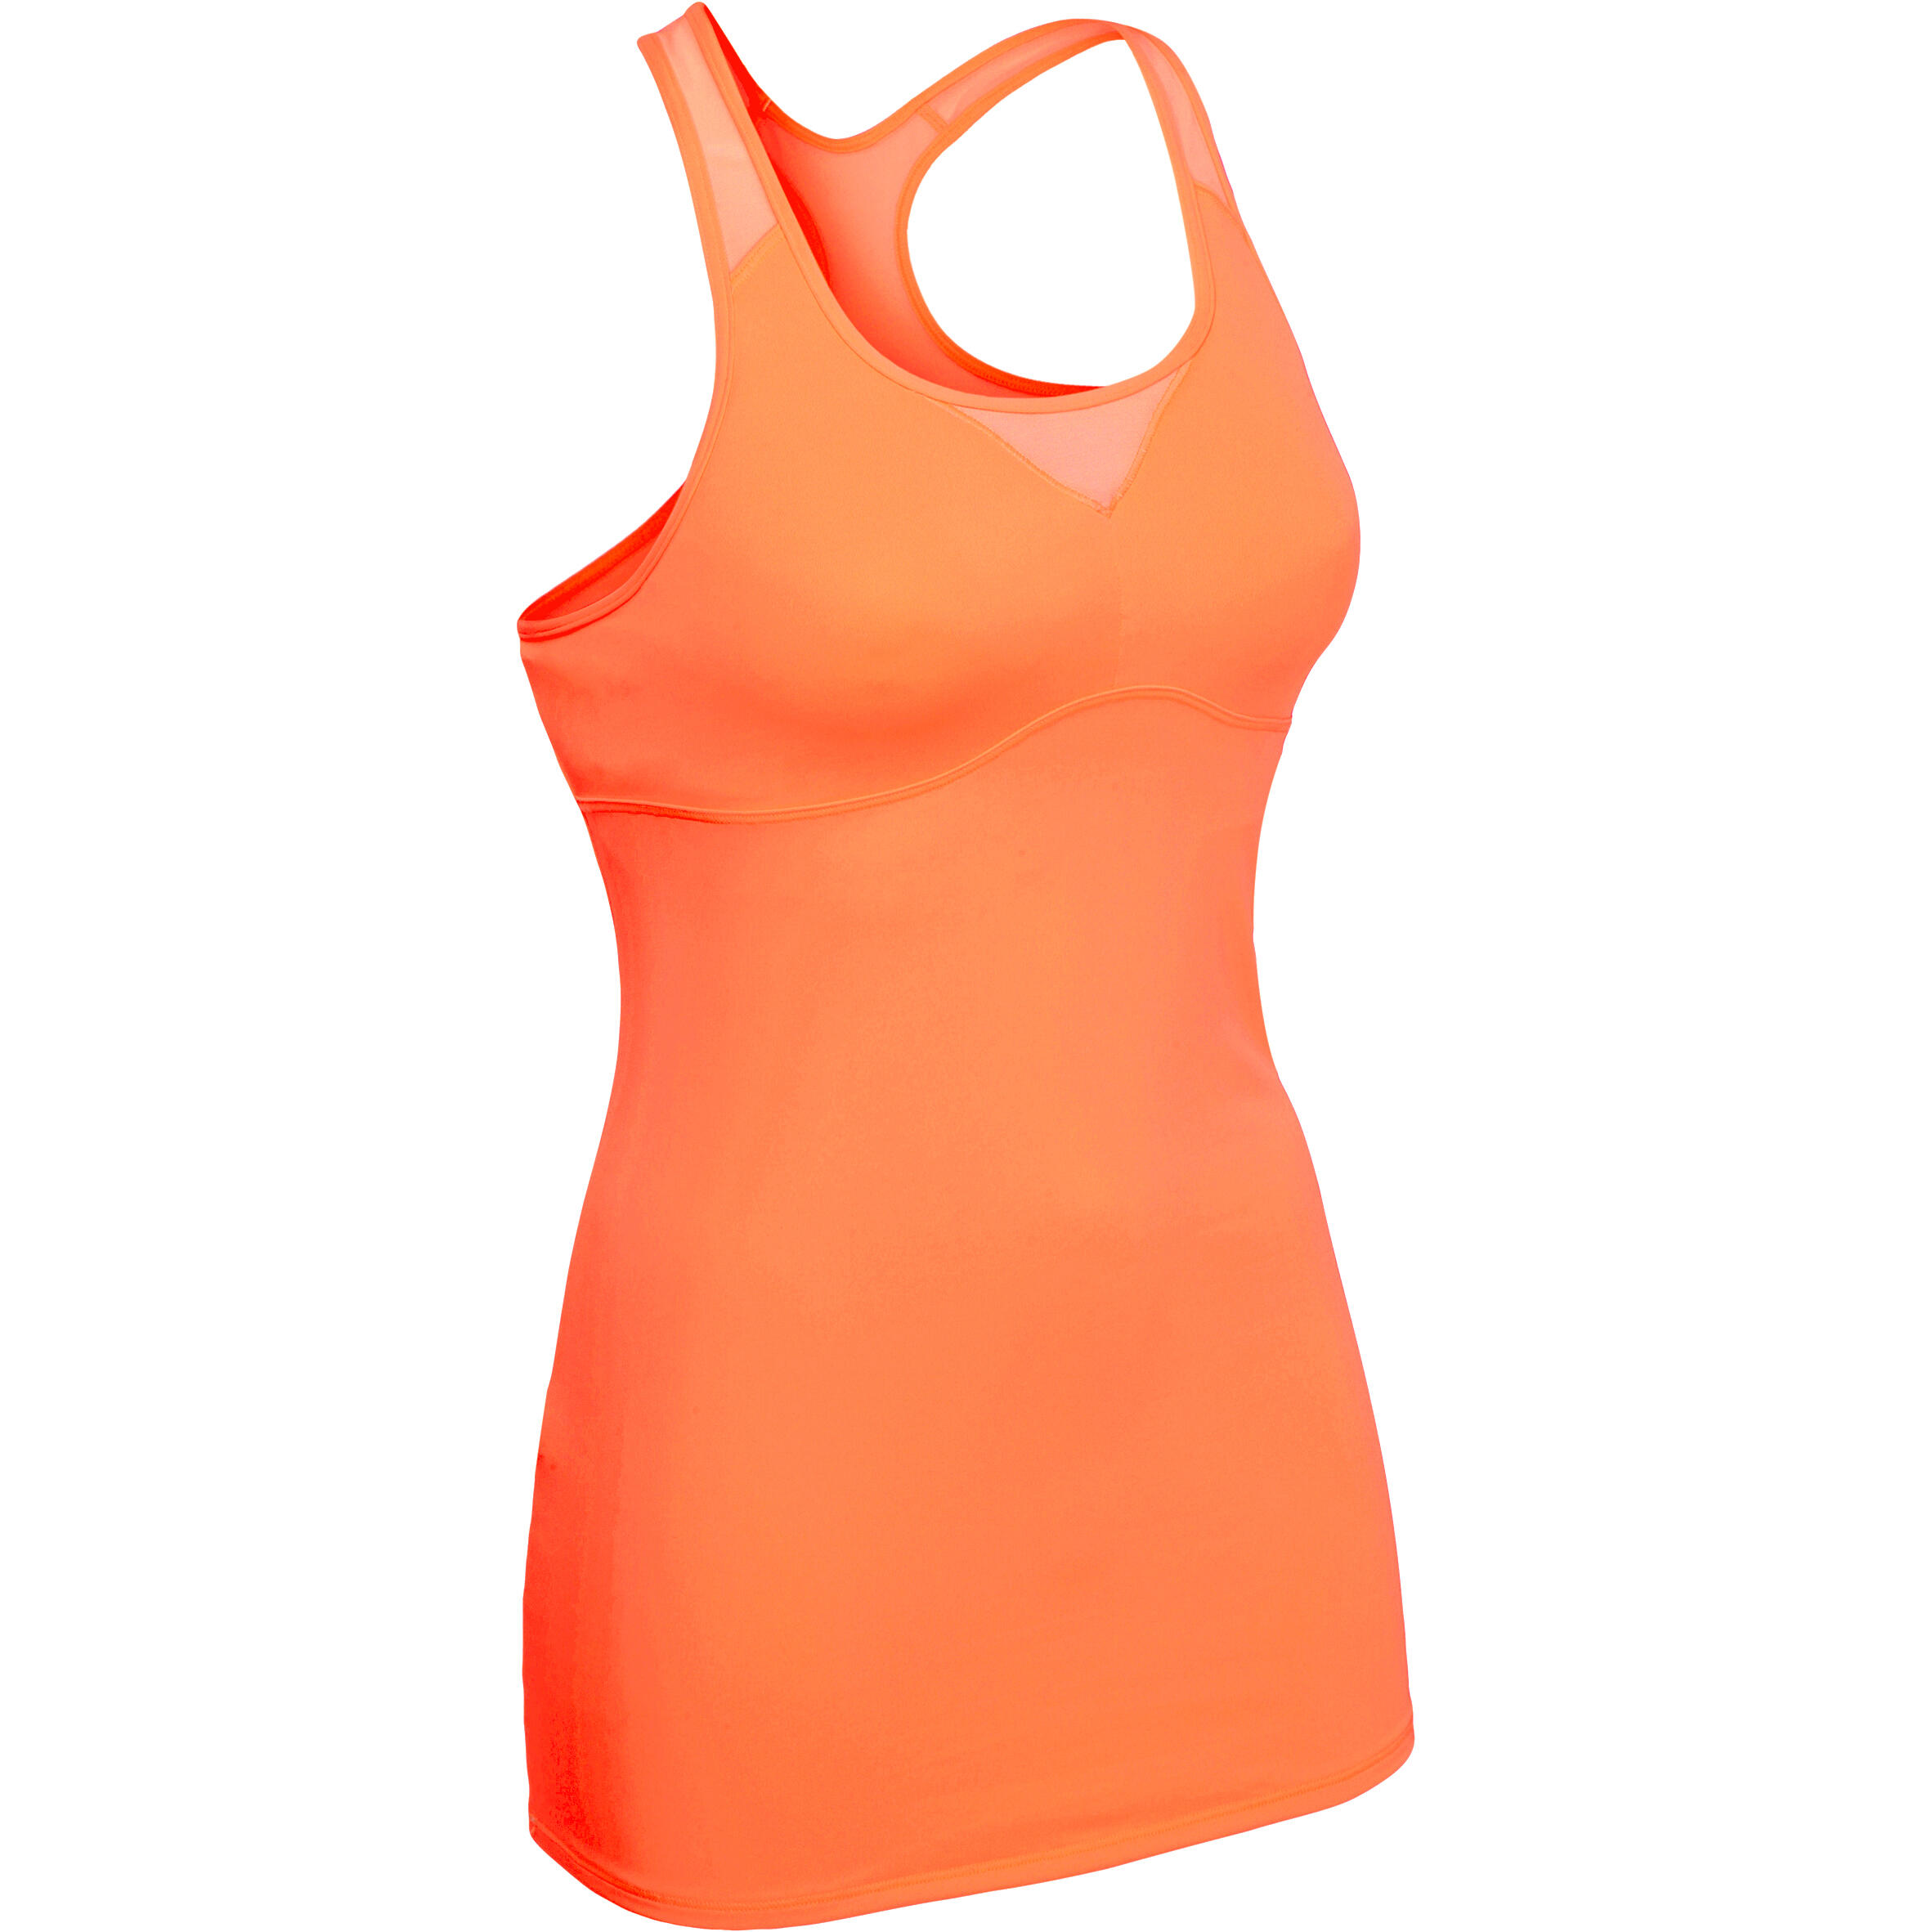 Breathe Women's Fitness Tank Top with Built-in Bra - Neon Orange DOMYOS ...